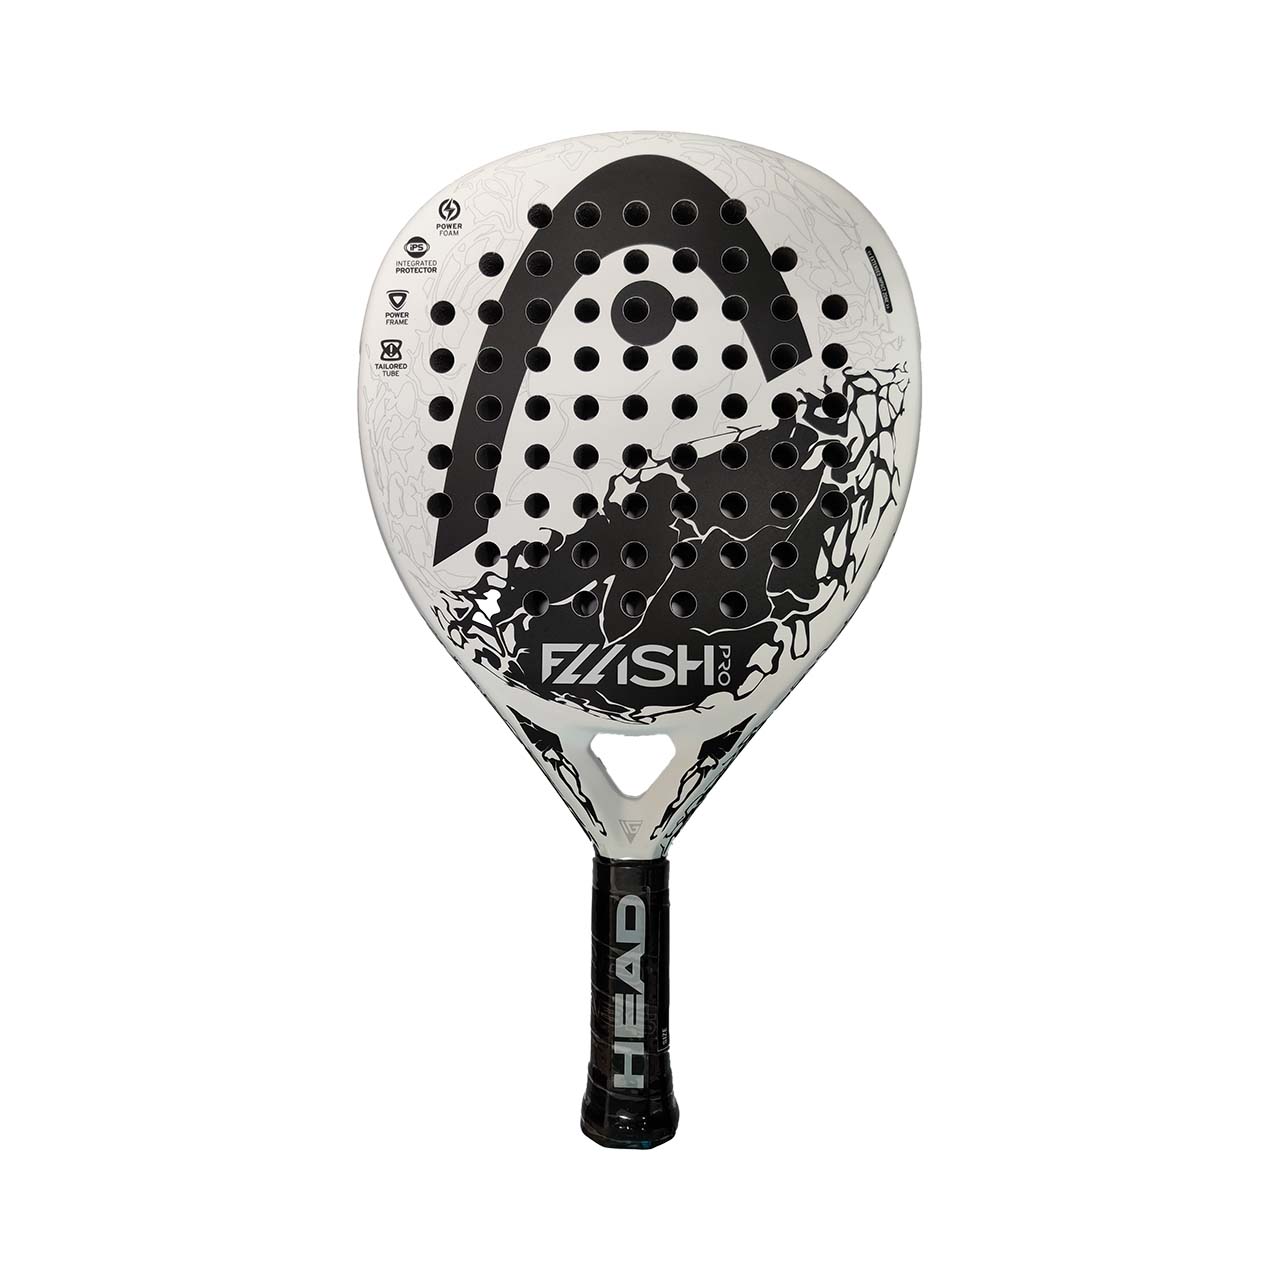 sport service italia padel racket head flash pro 2.0 - Paddle - Sport Service Italia